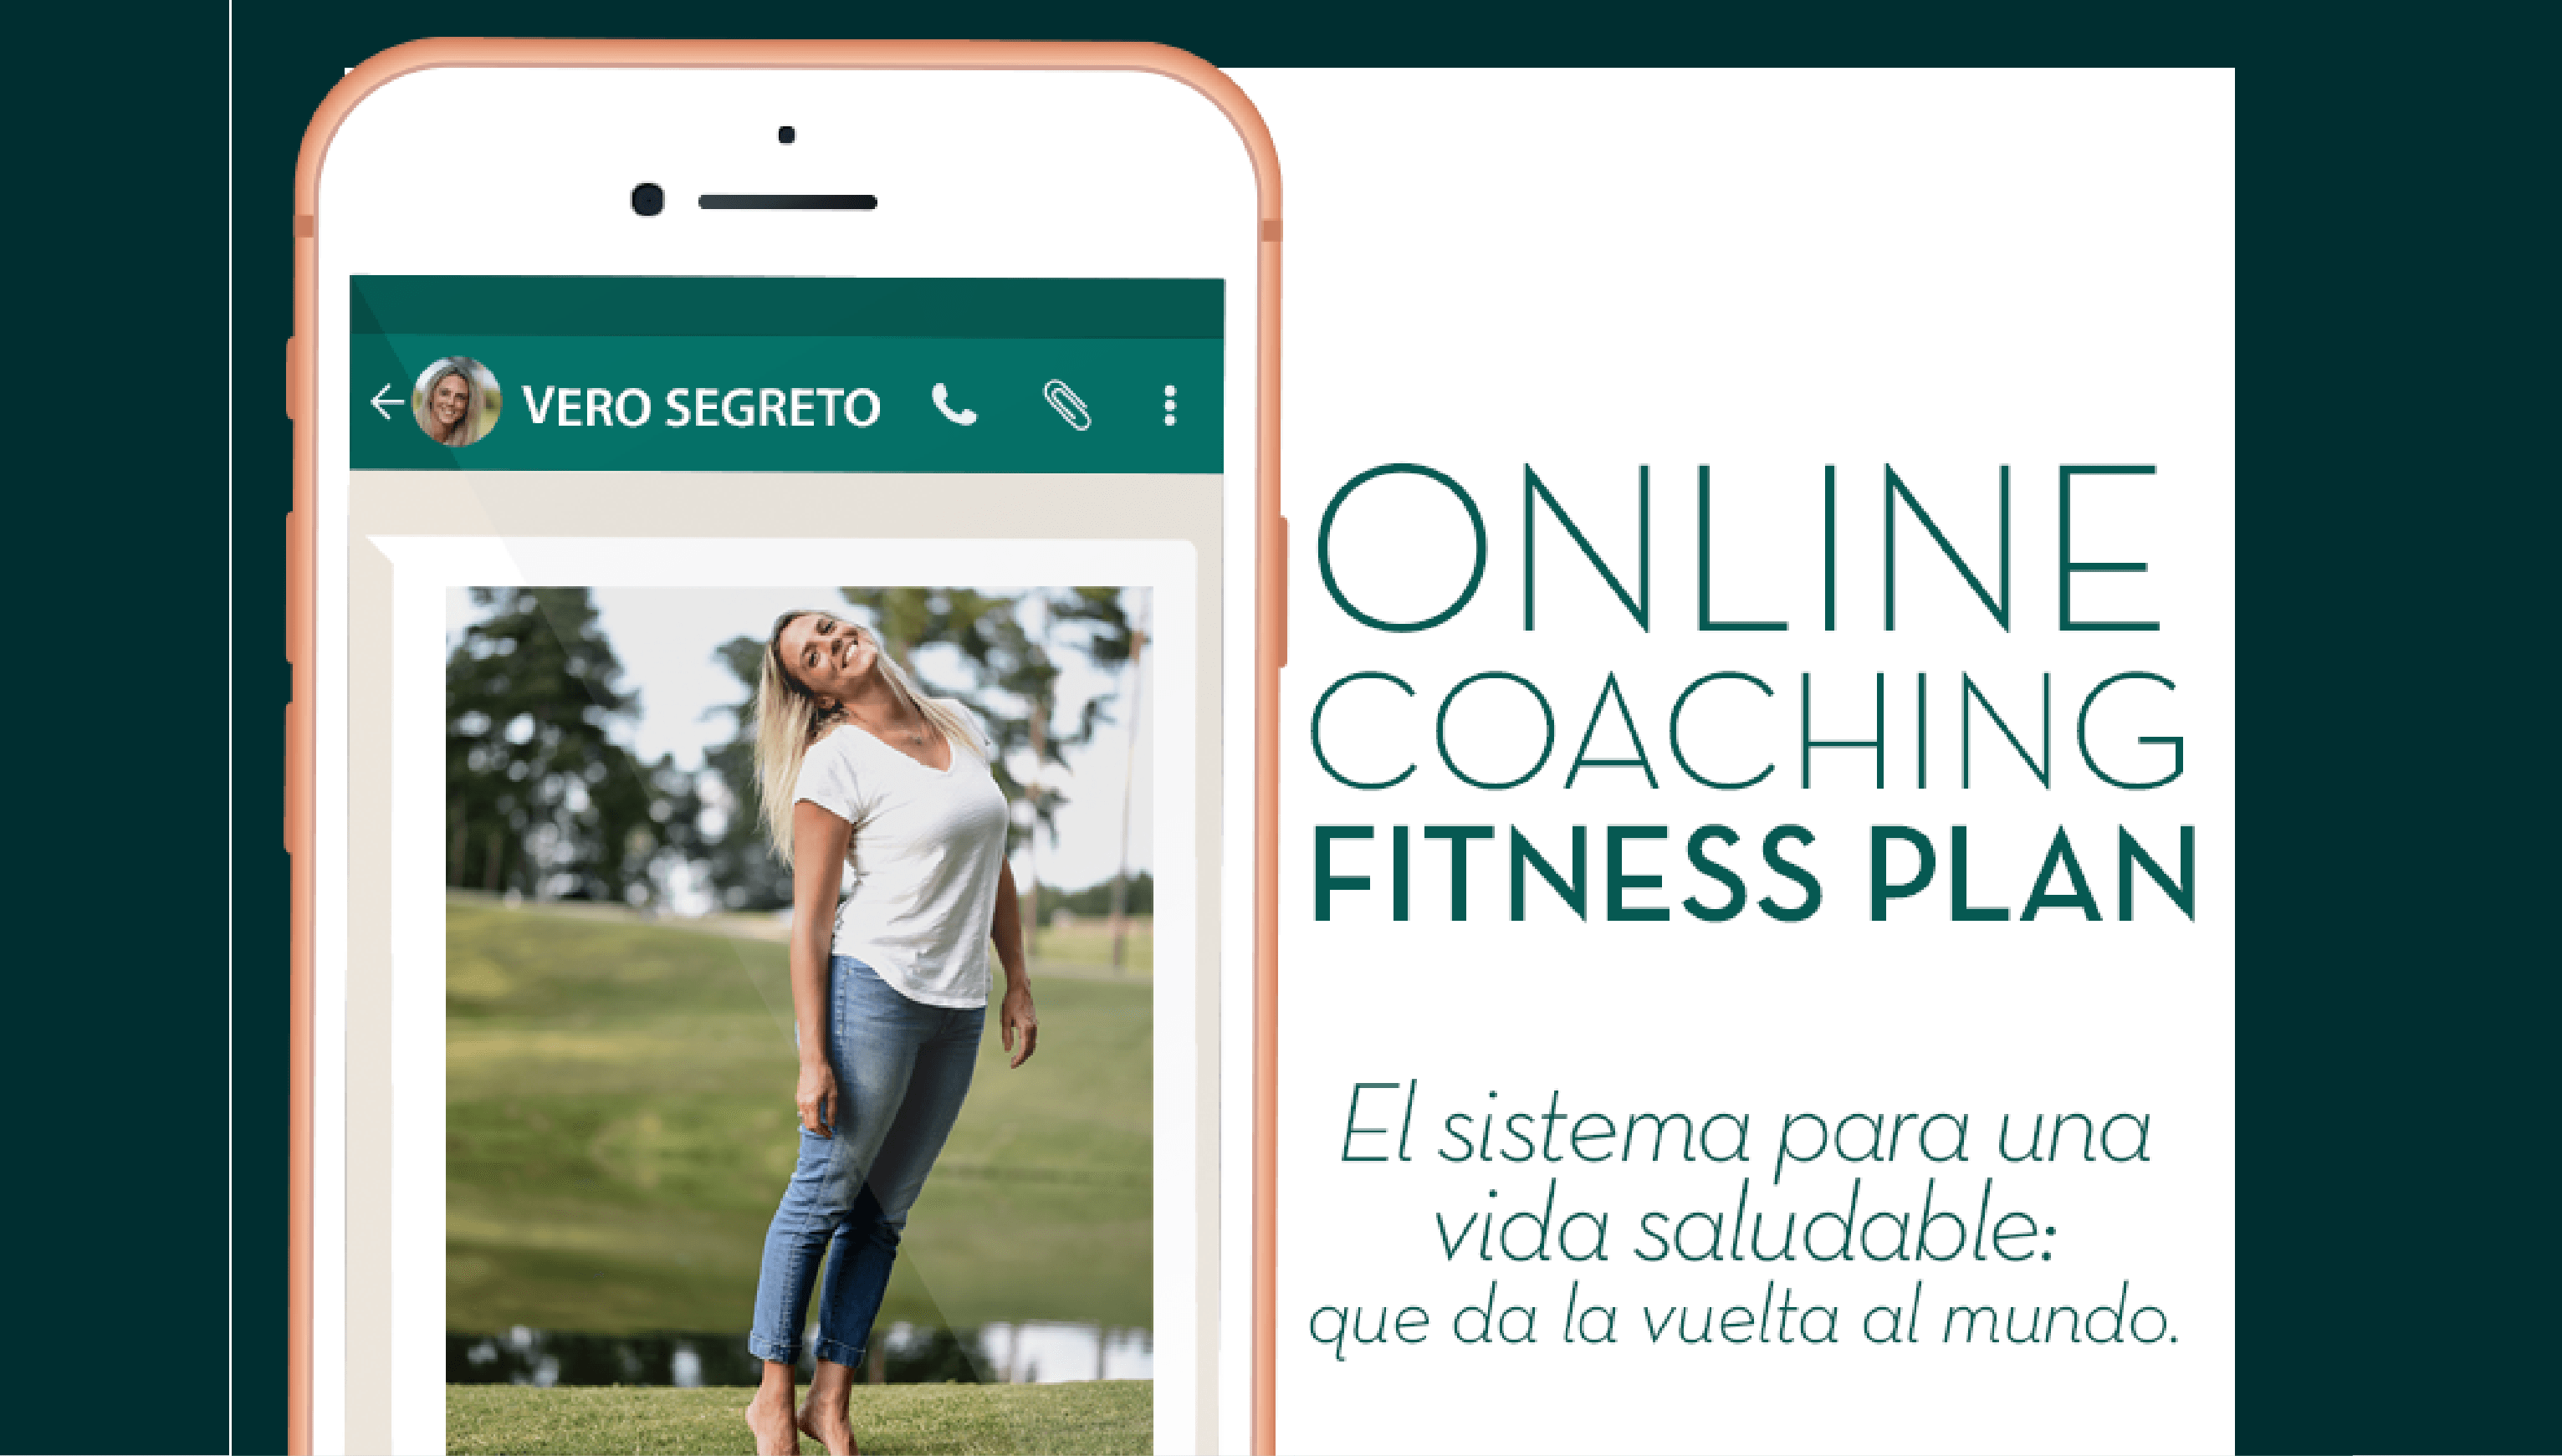 Online coaching fitness plan